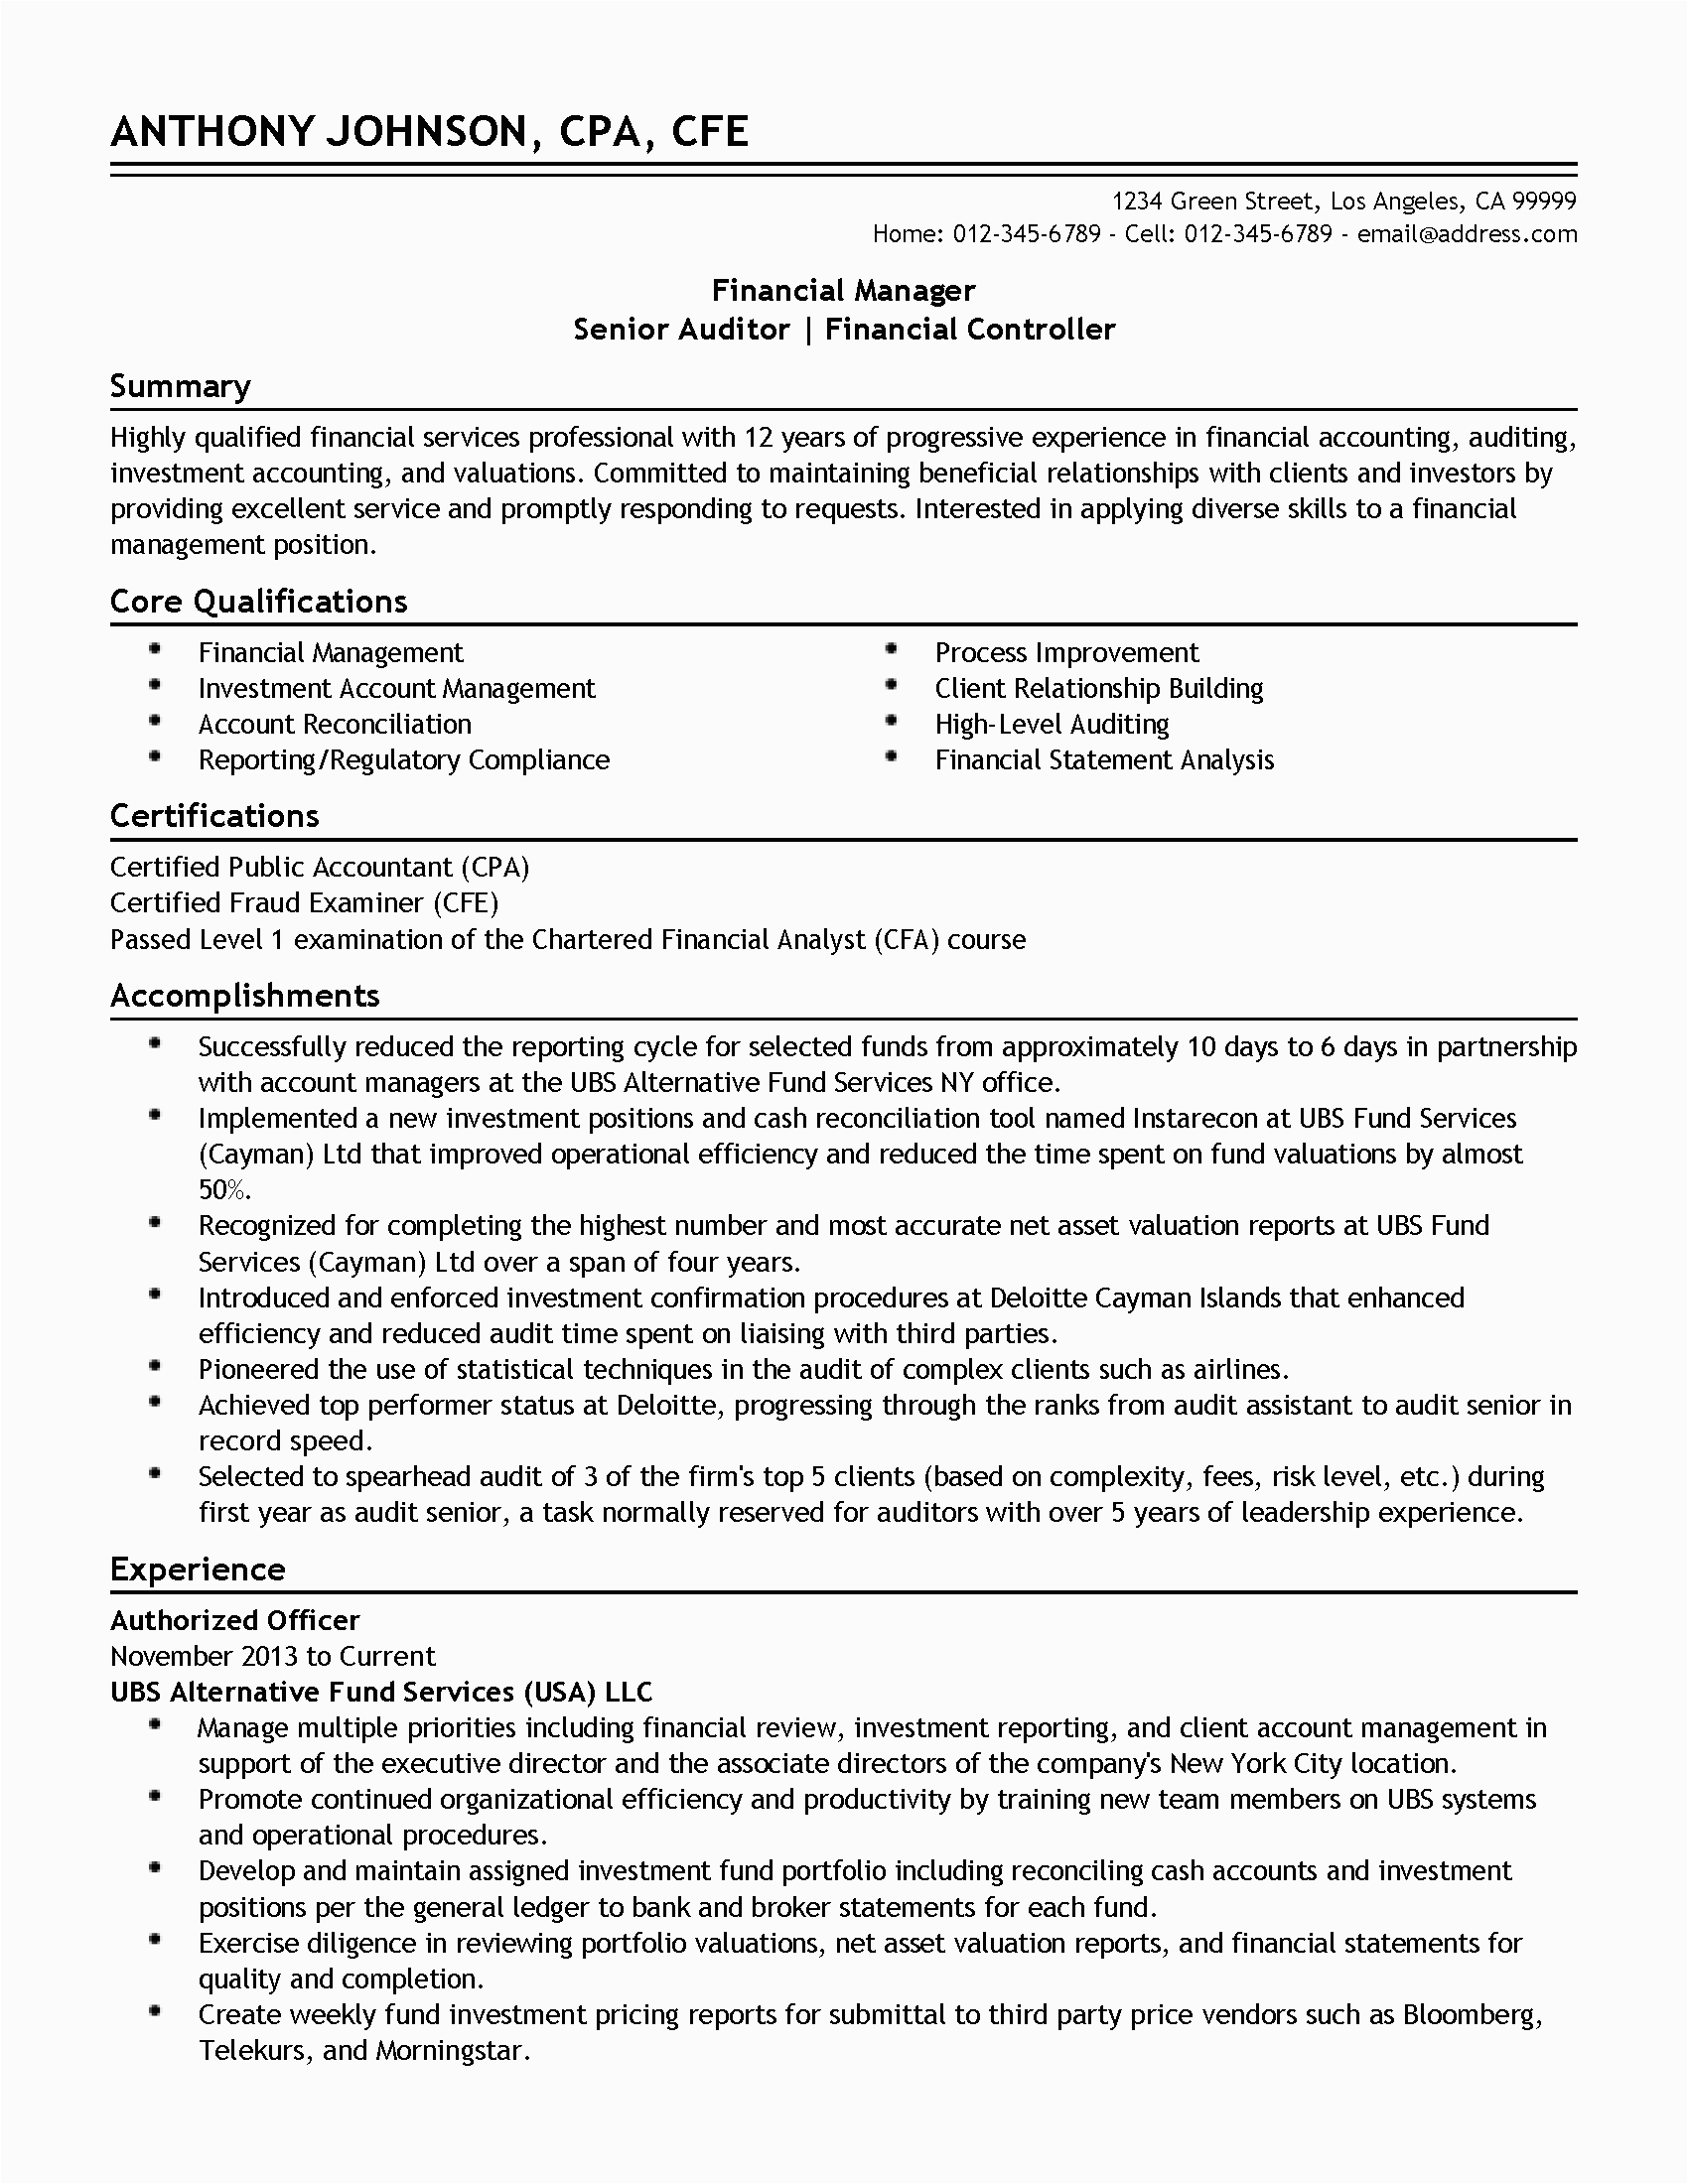 Cfa Level 1 Candidate Resume Sample Cfa Level 1 Resume Examples Resume Templates